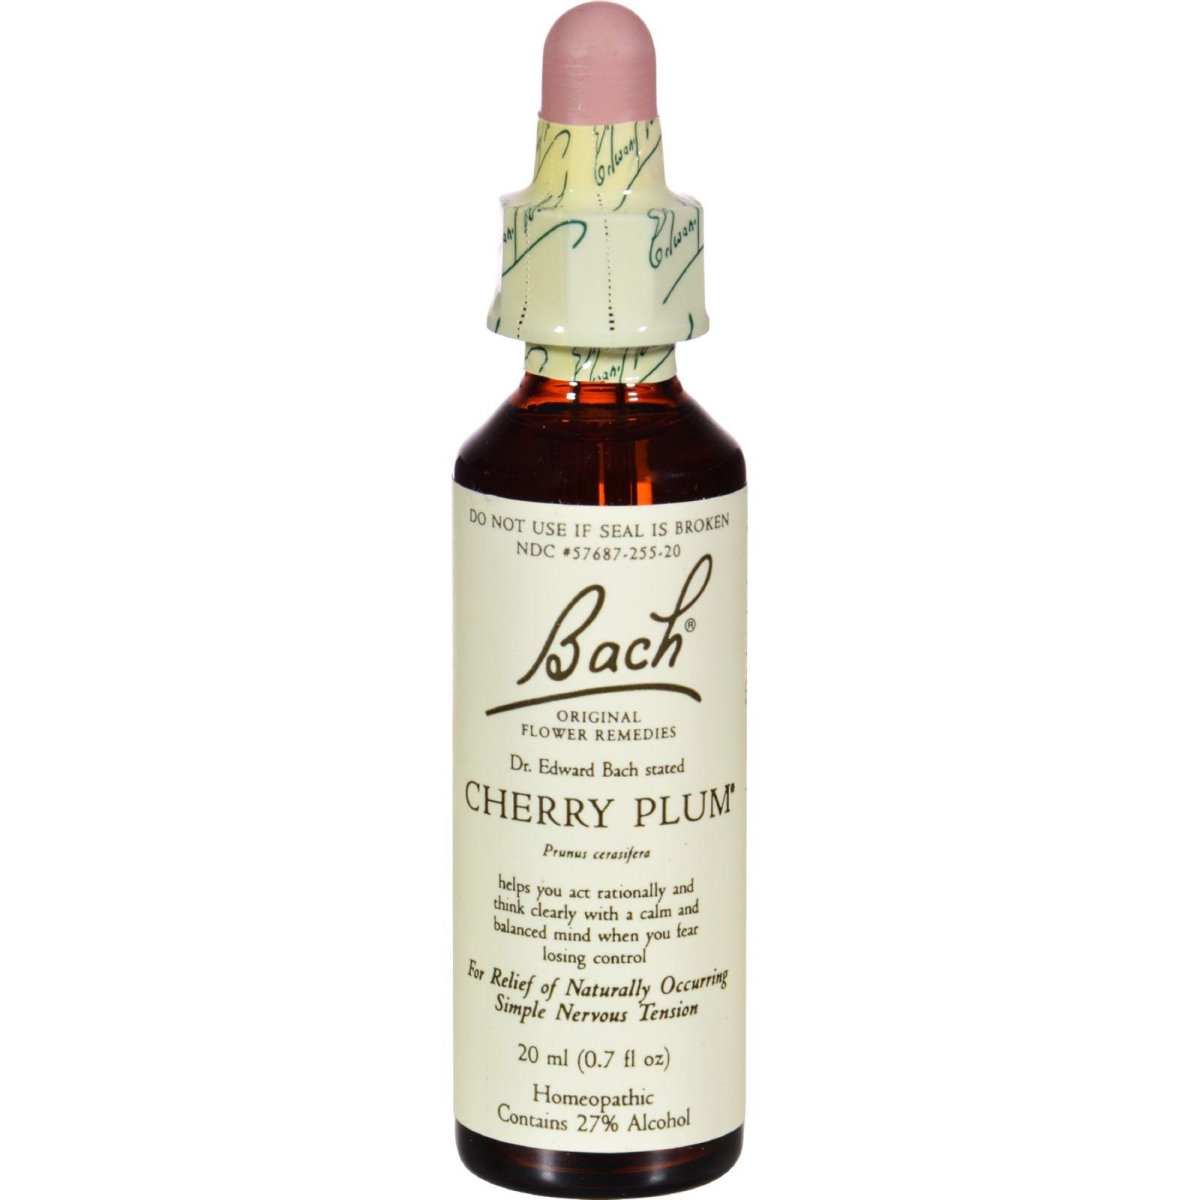 Hg0233494 0.7 Fl Oz Flower Remedies Essence, Cherry Plum